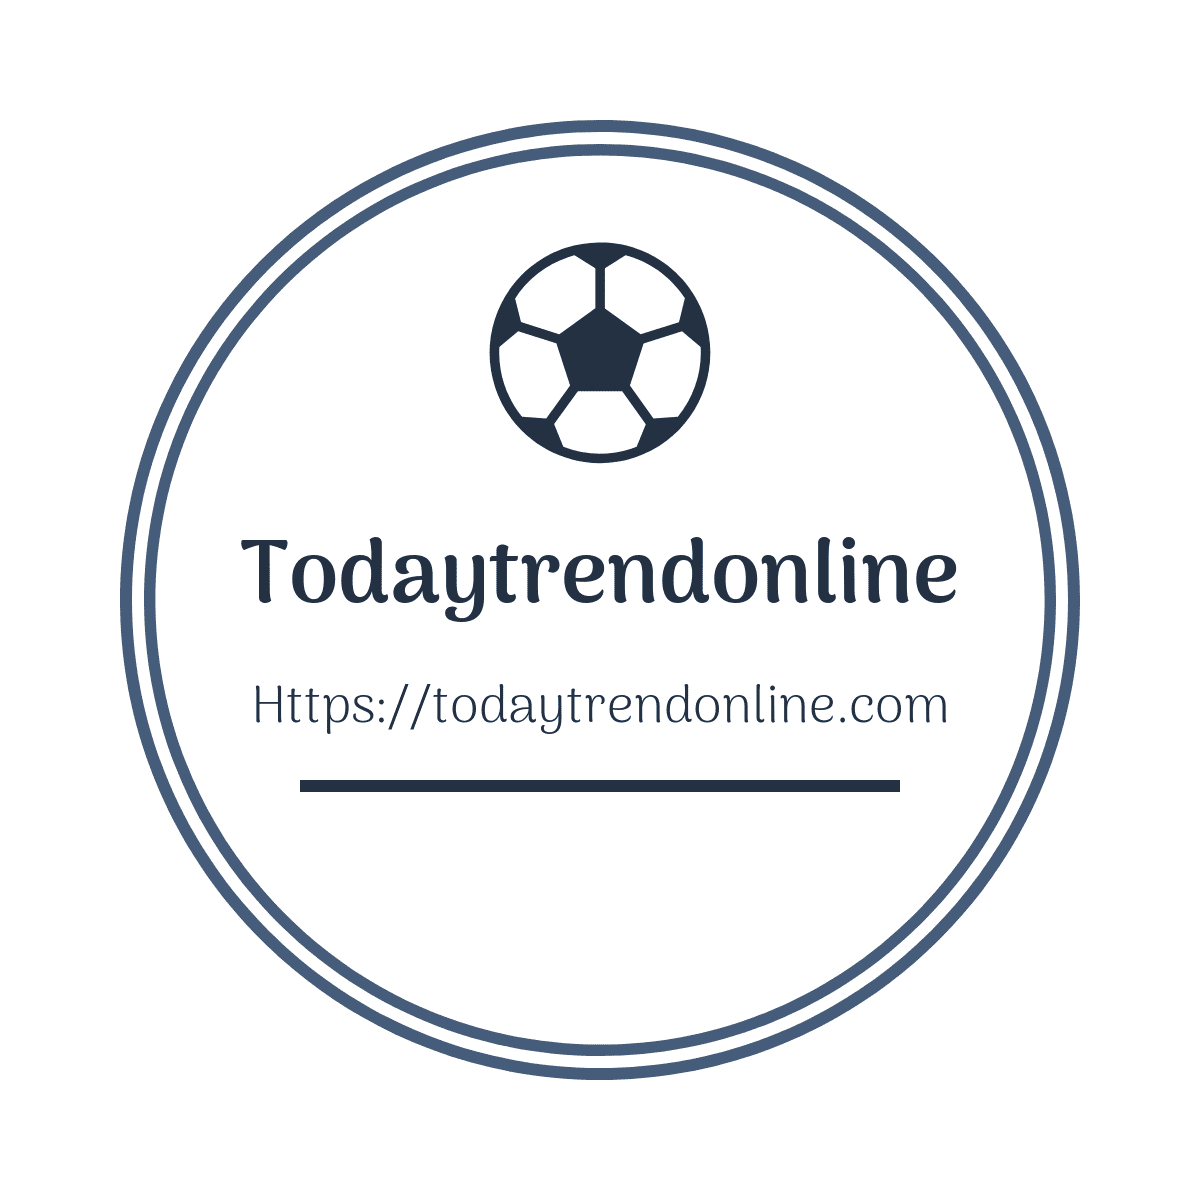 Todaytrendonline